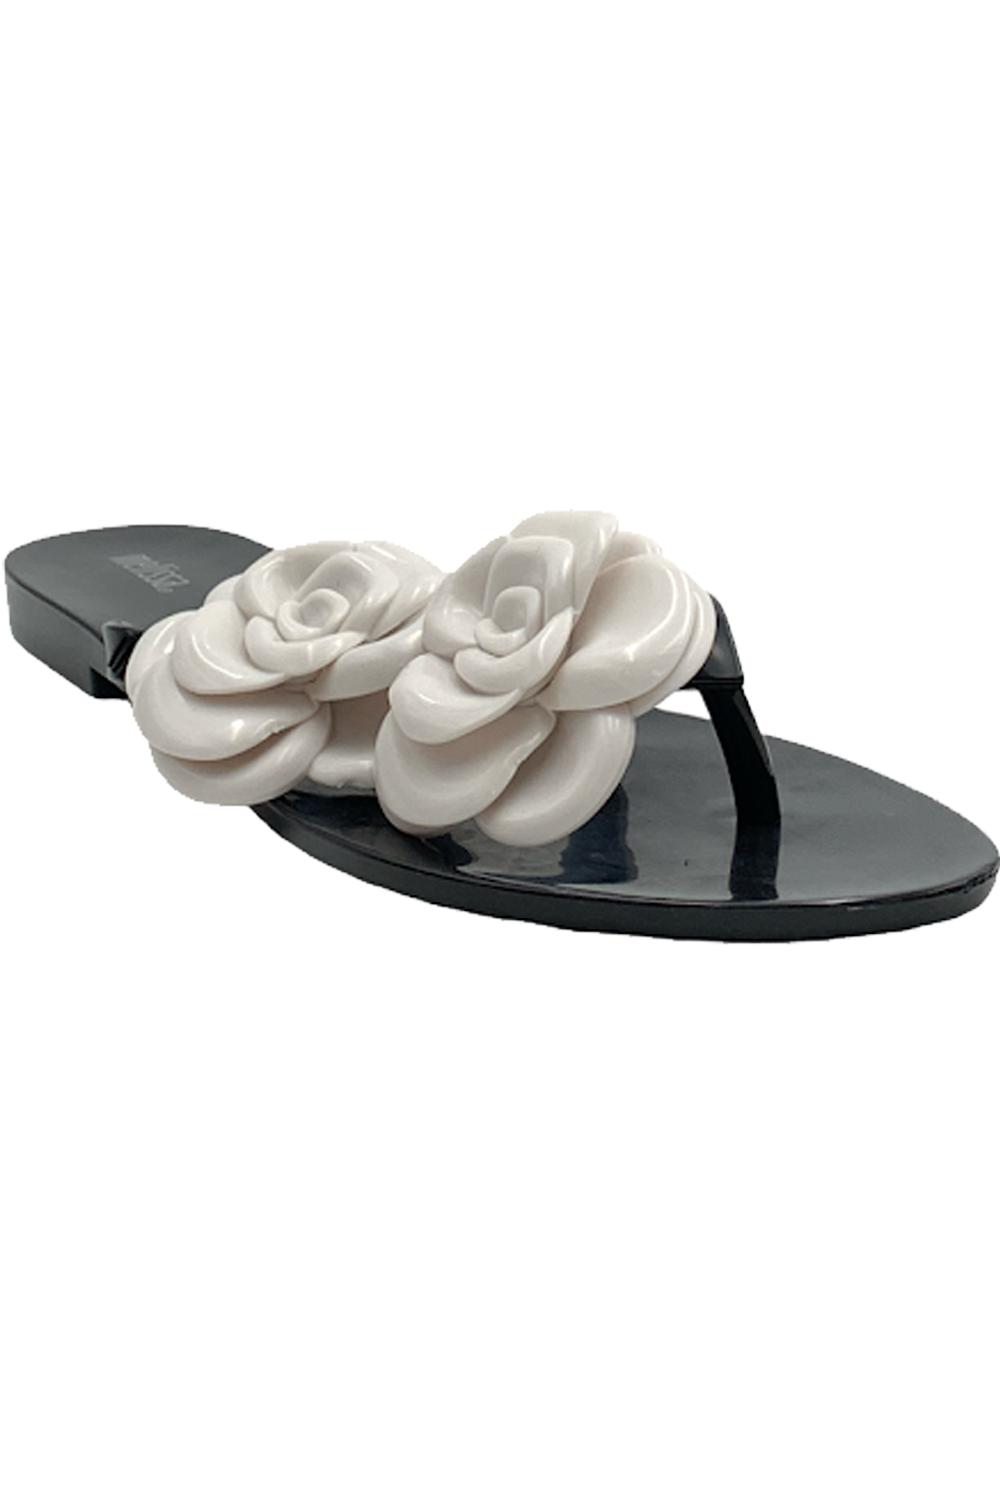 Chanel Black Jelly Camellia Sandal